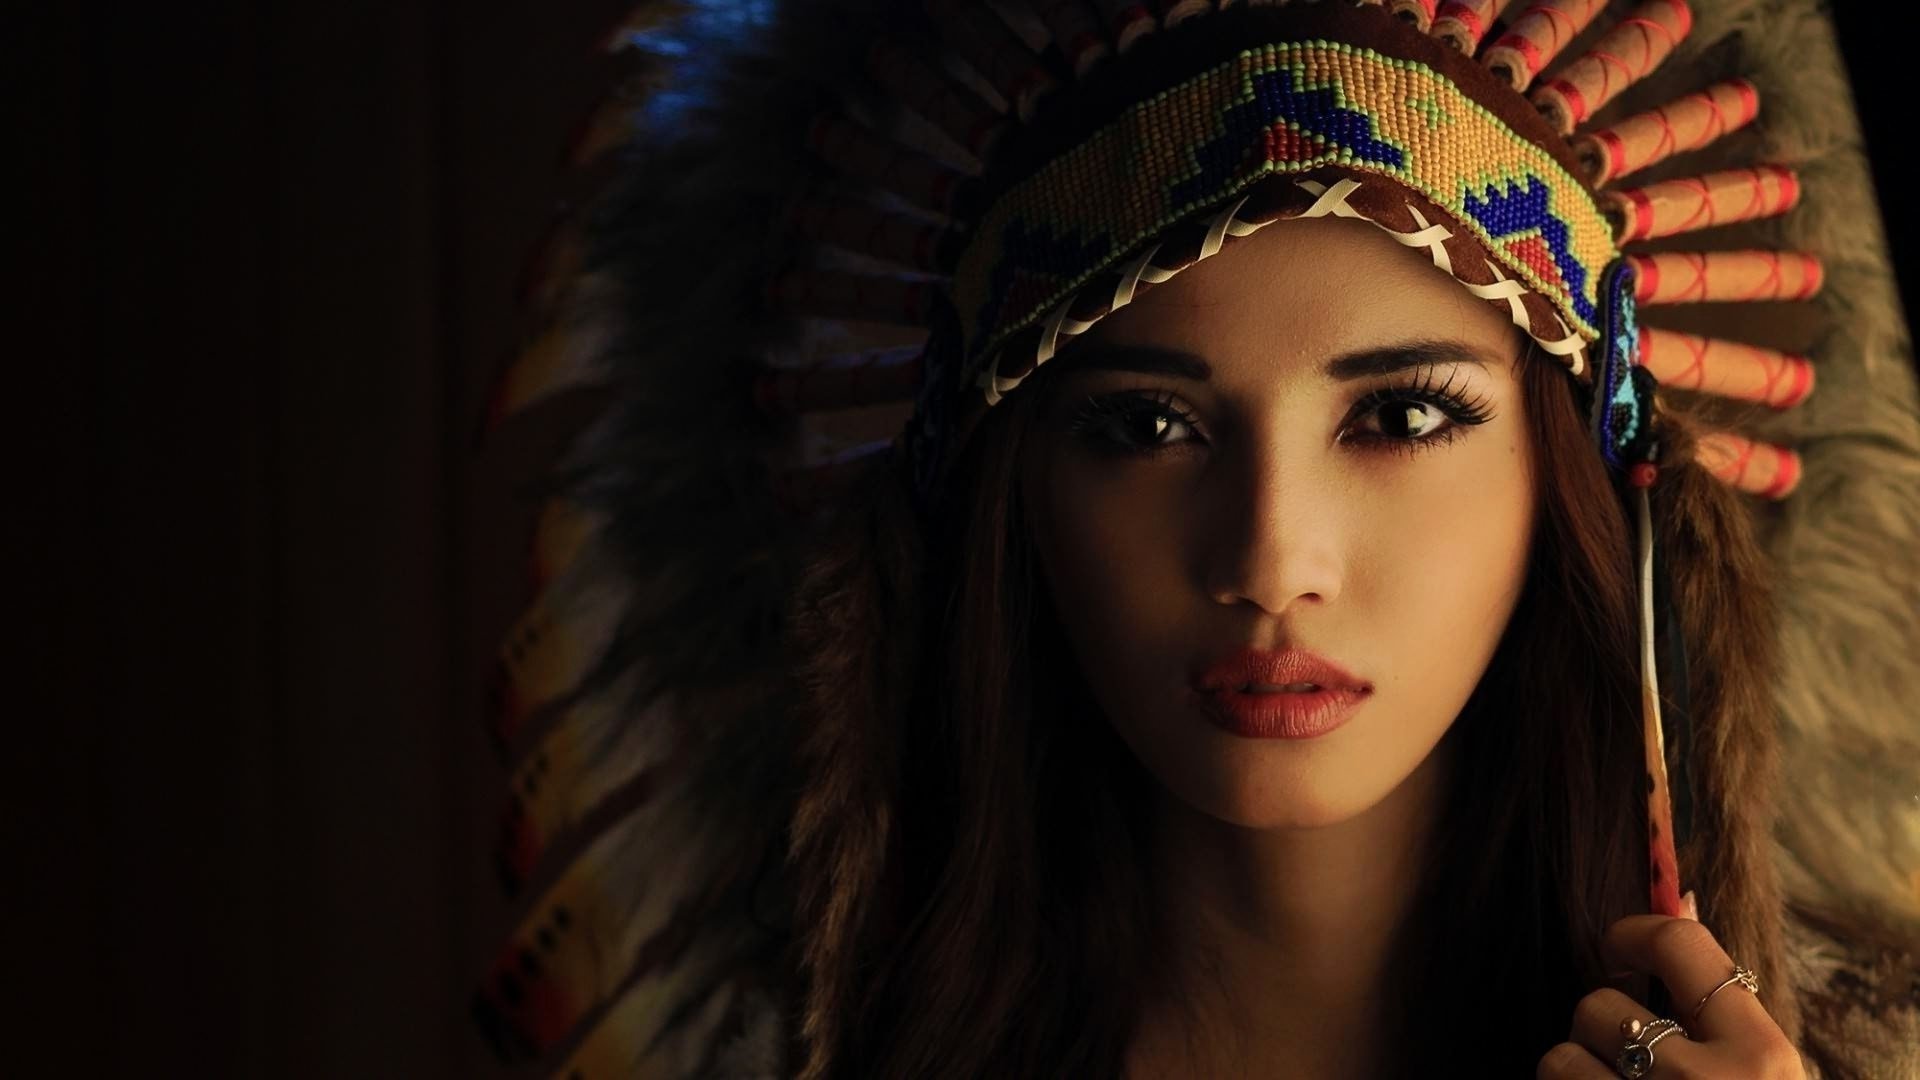 Free Sexy Women Photos Fresh Native American Background ·① Download Free Stunning